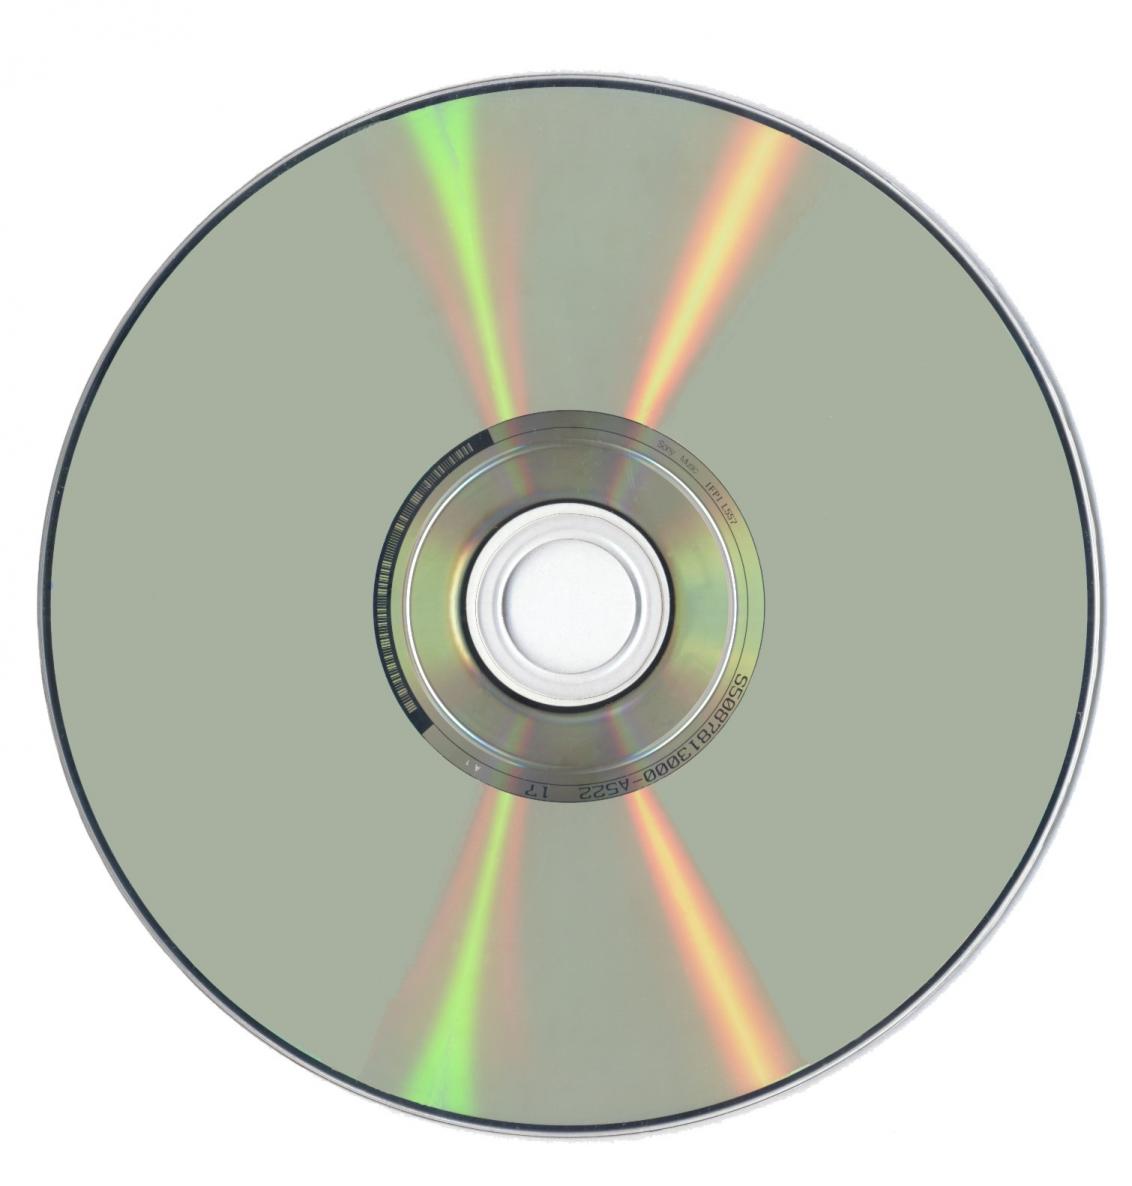 How copy an ARccOS protected DVD